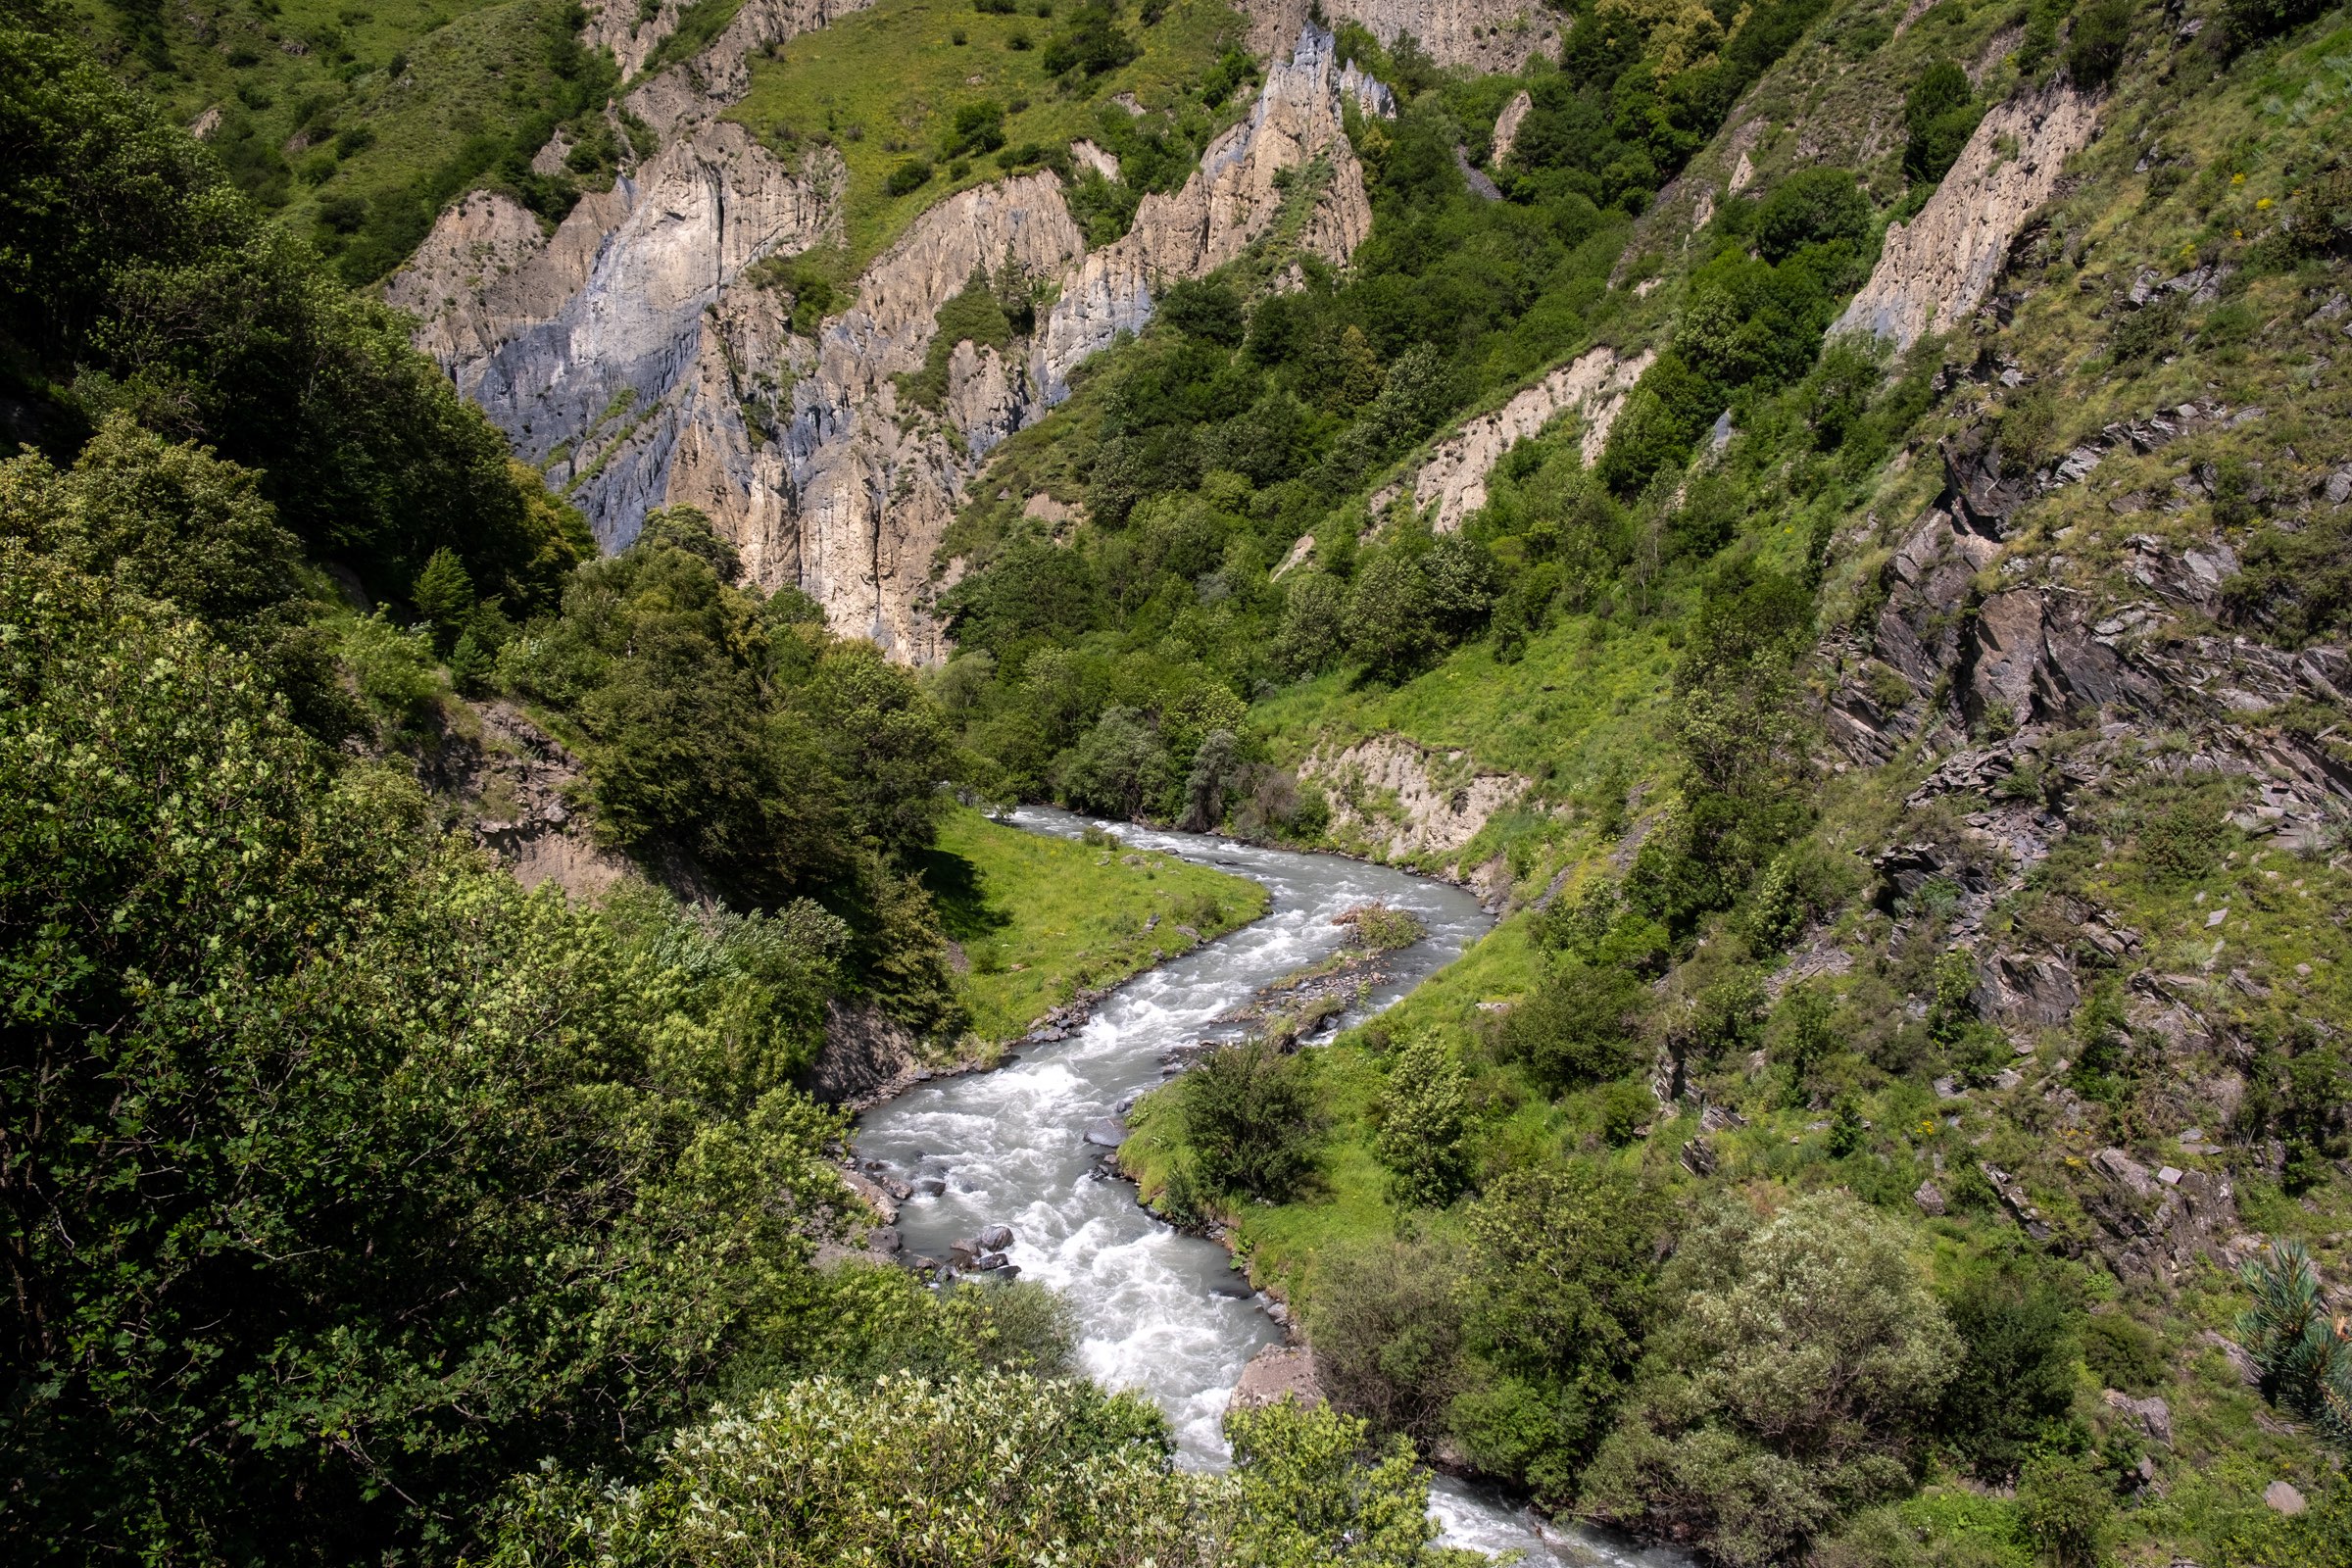 Arghuni river snaking through the deep gorge